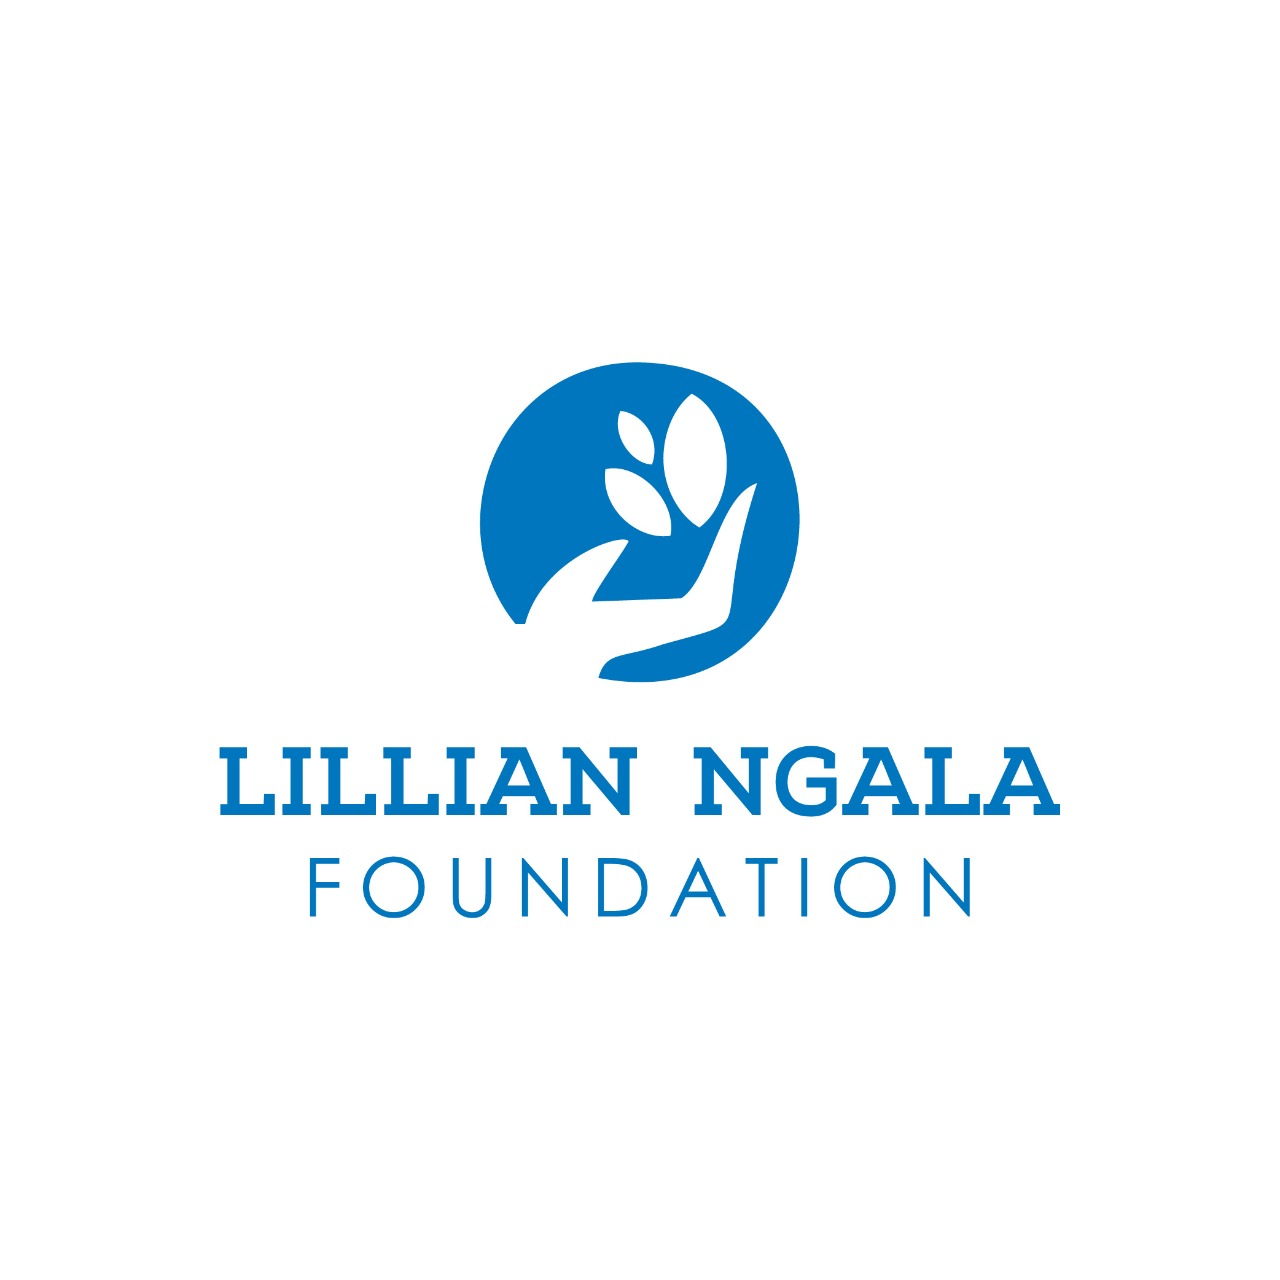 Lillian Ngala Foundation